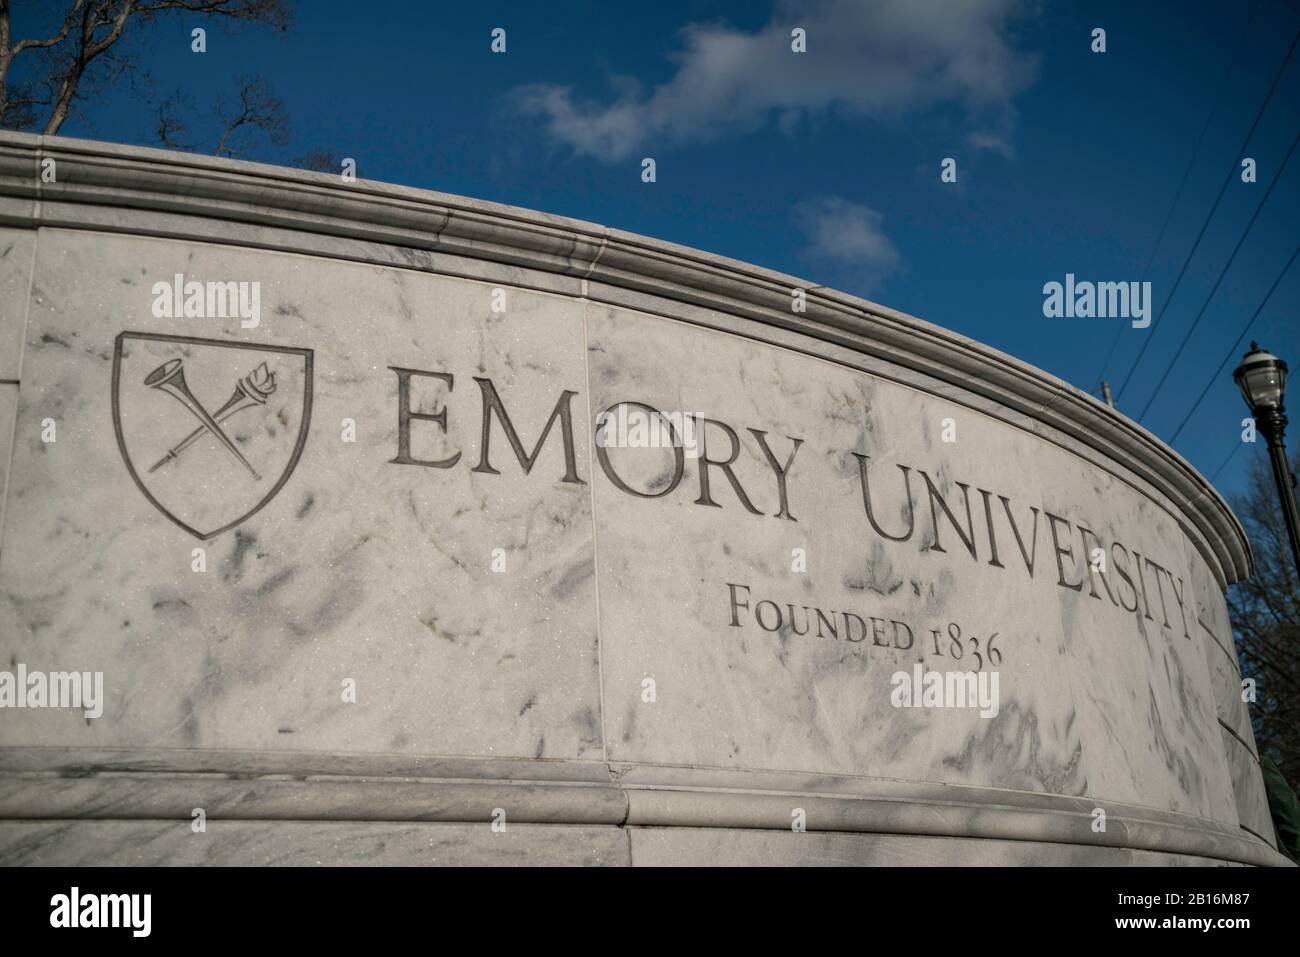 Atlanta, Georgia - 6. Februar 2020: Emory University Willkommensschild auf Marmor Stockfoto